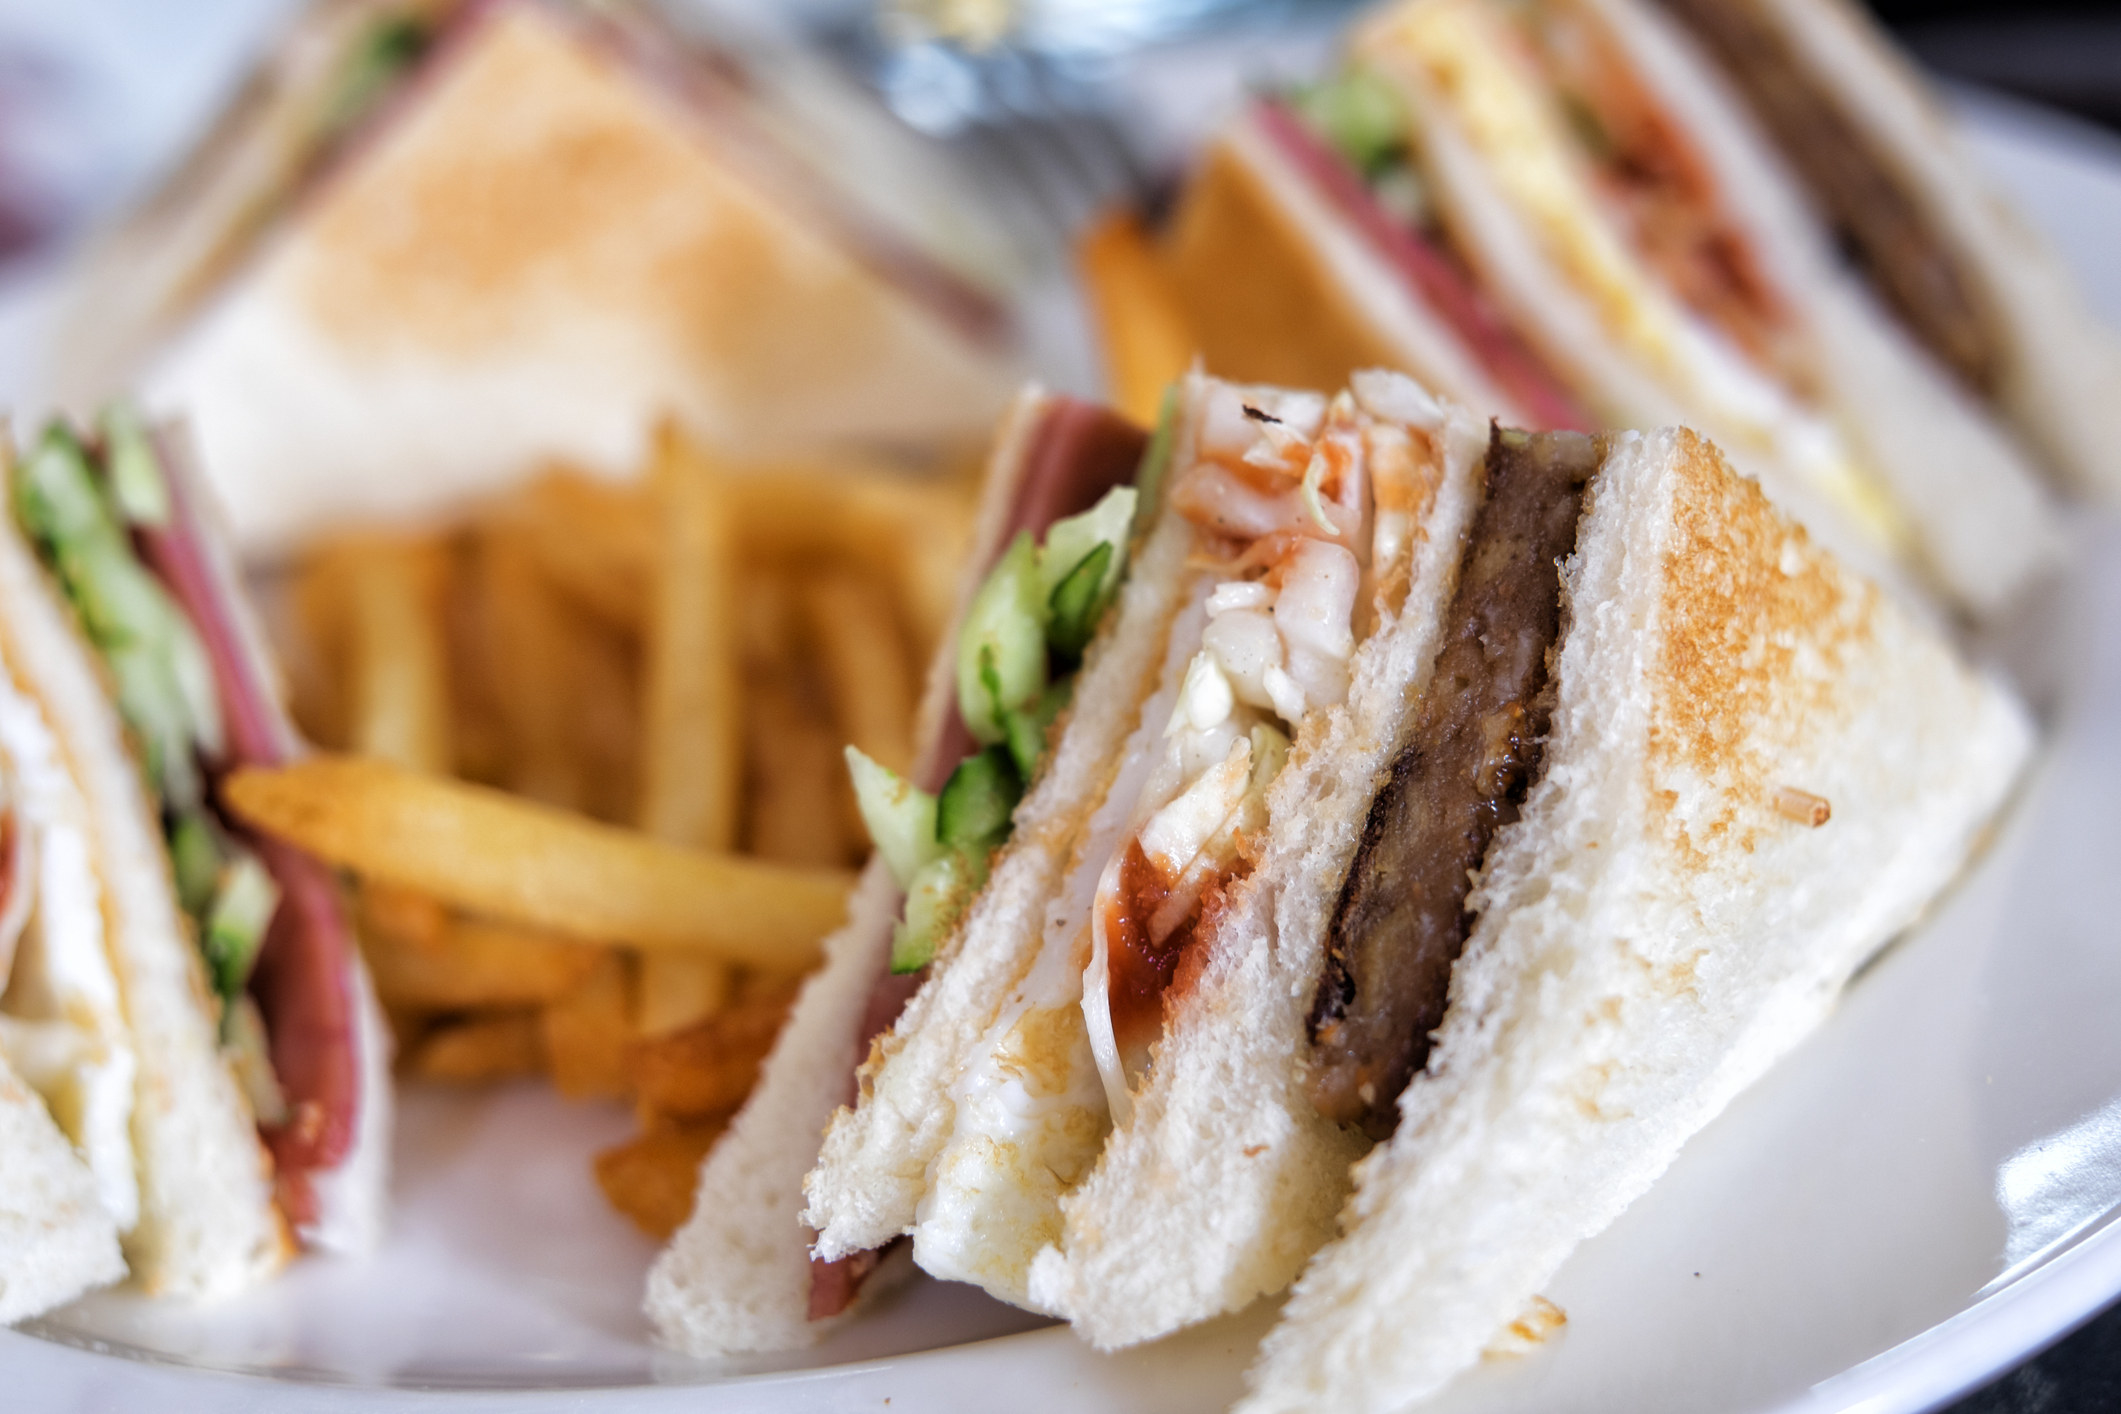 A club sandwich with fries.